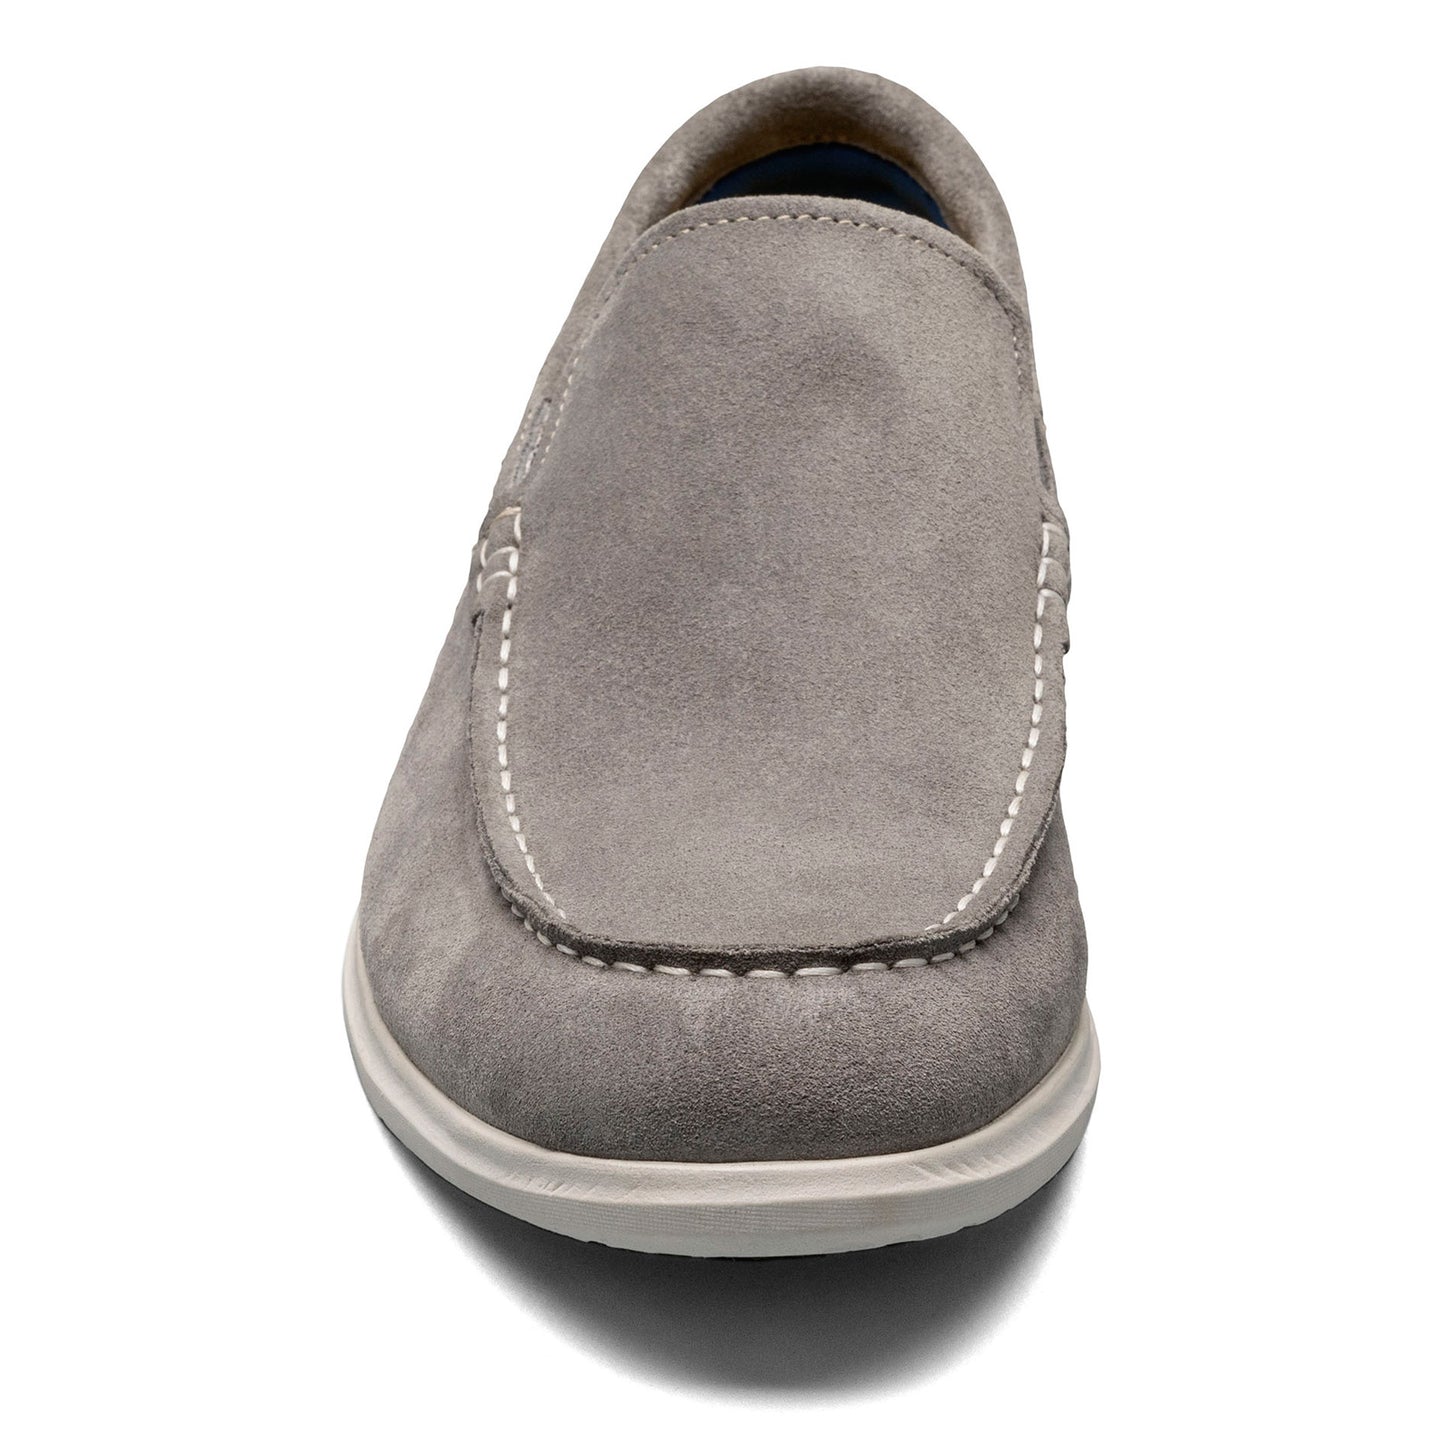 Peltz Shoes  Men's Florsheim Hamptons Moc Toe Venetian Loafer GREY SUEDE 14397-061